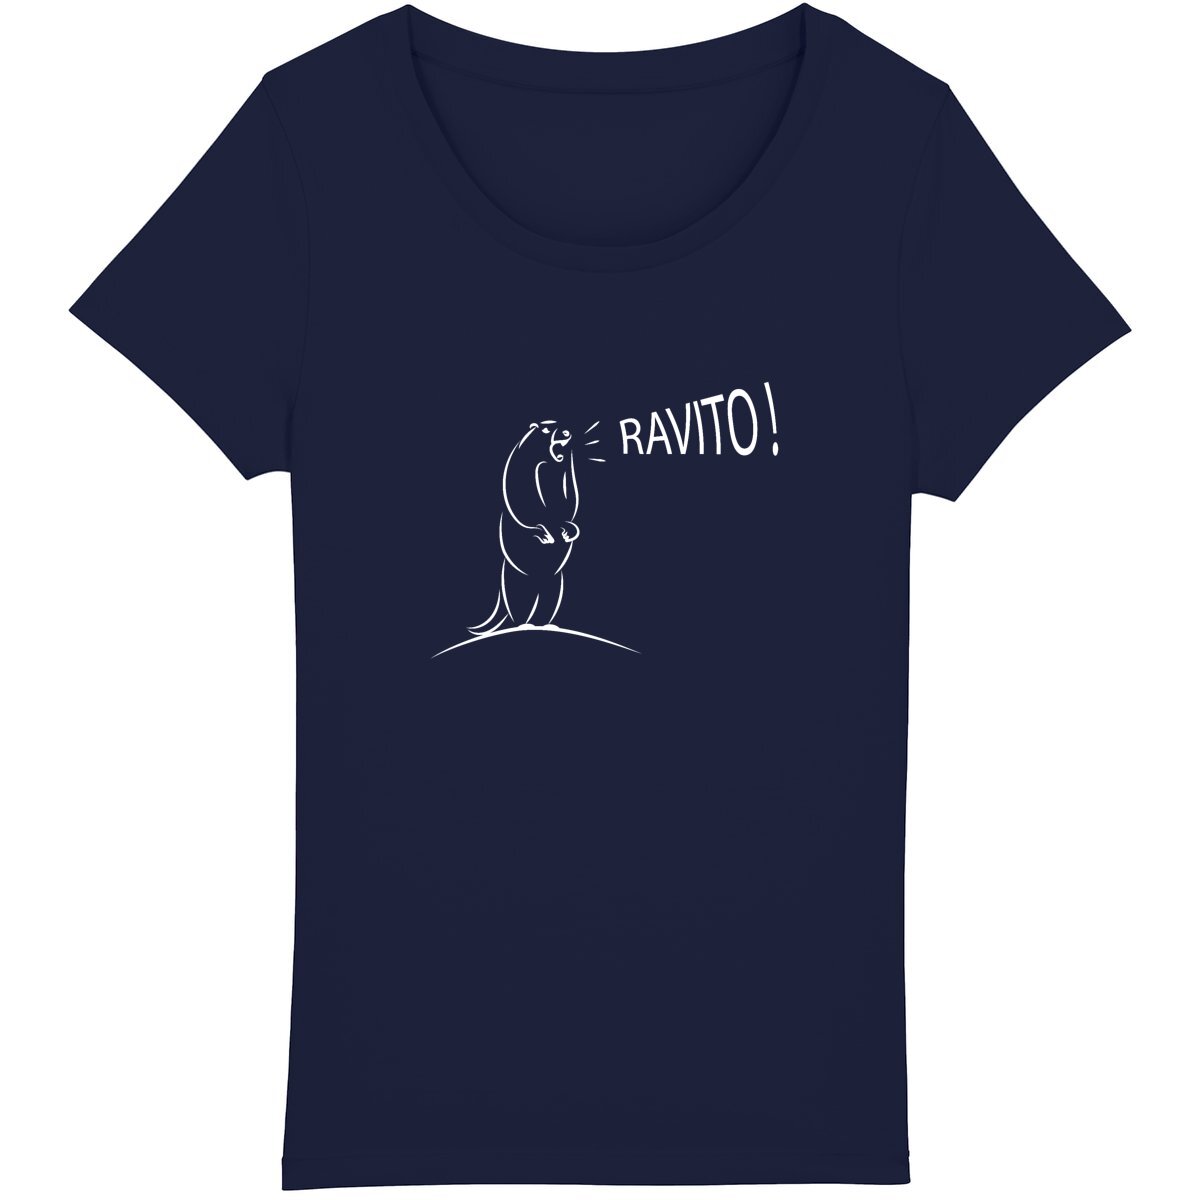 T-shirt coton bio "Ravito" esprit trail et pause gourmande